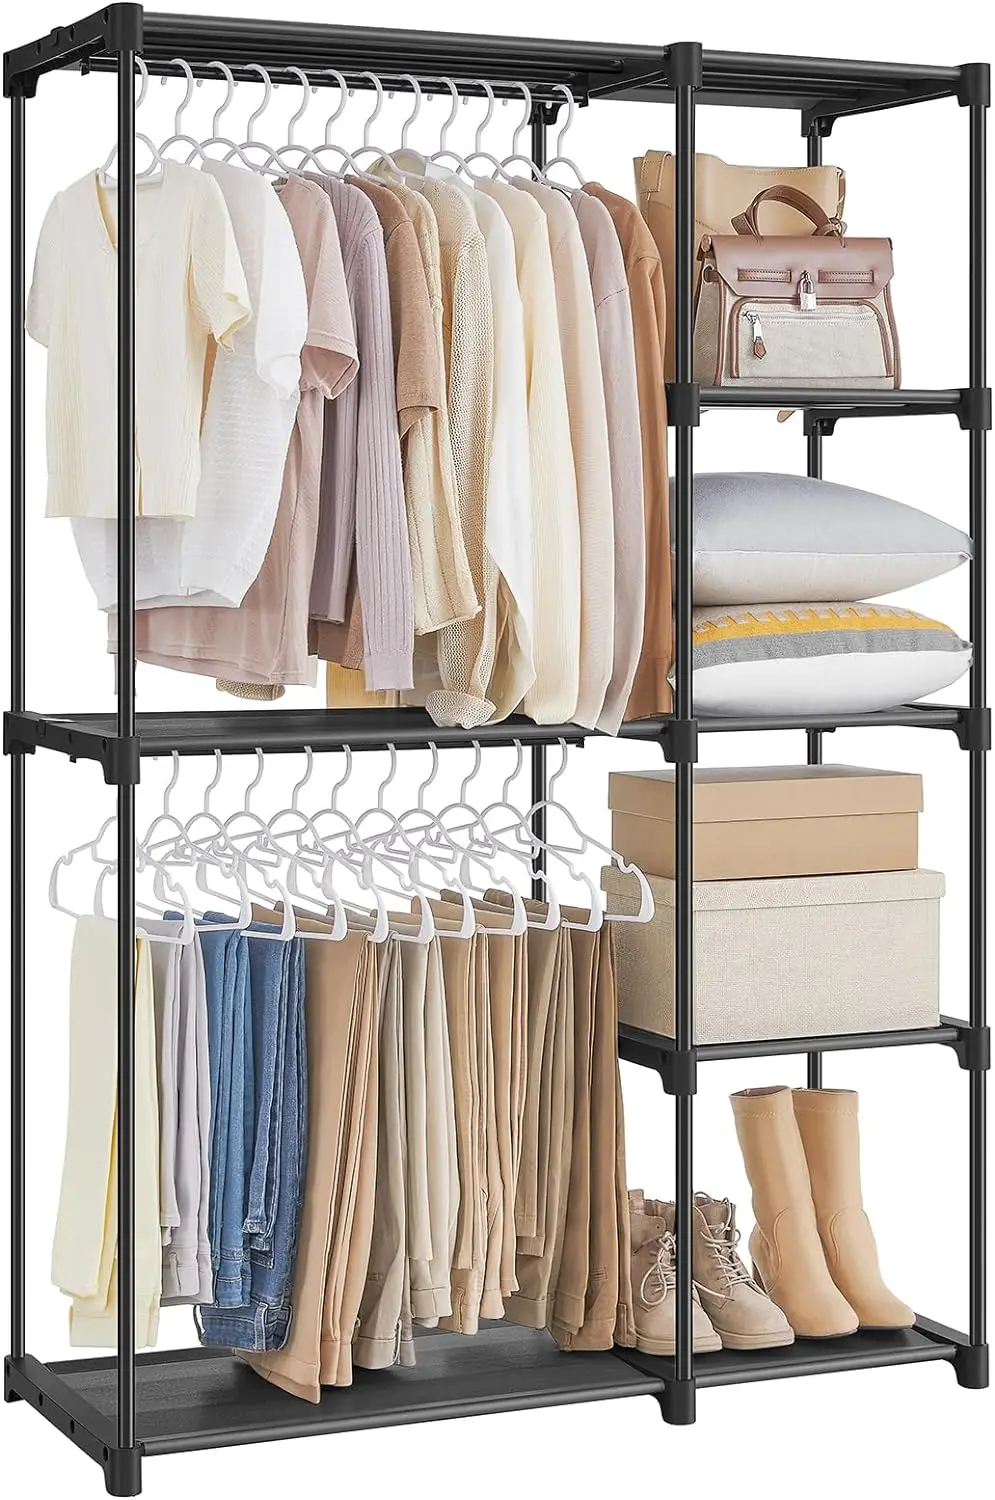 

Portable Closet, Freestanding Closet Organizer, Clothes Rack with Shelves, Hanging Rods, Storage Organizer